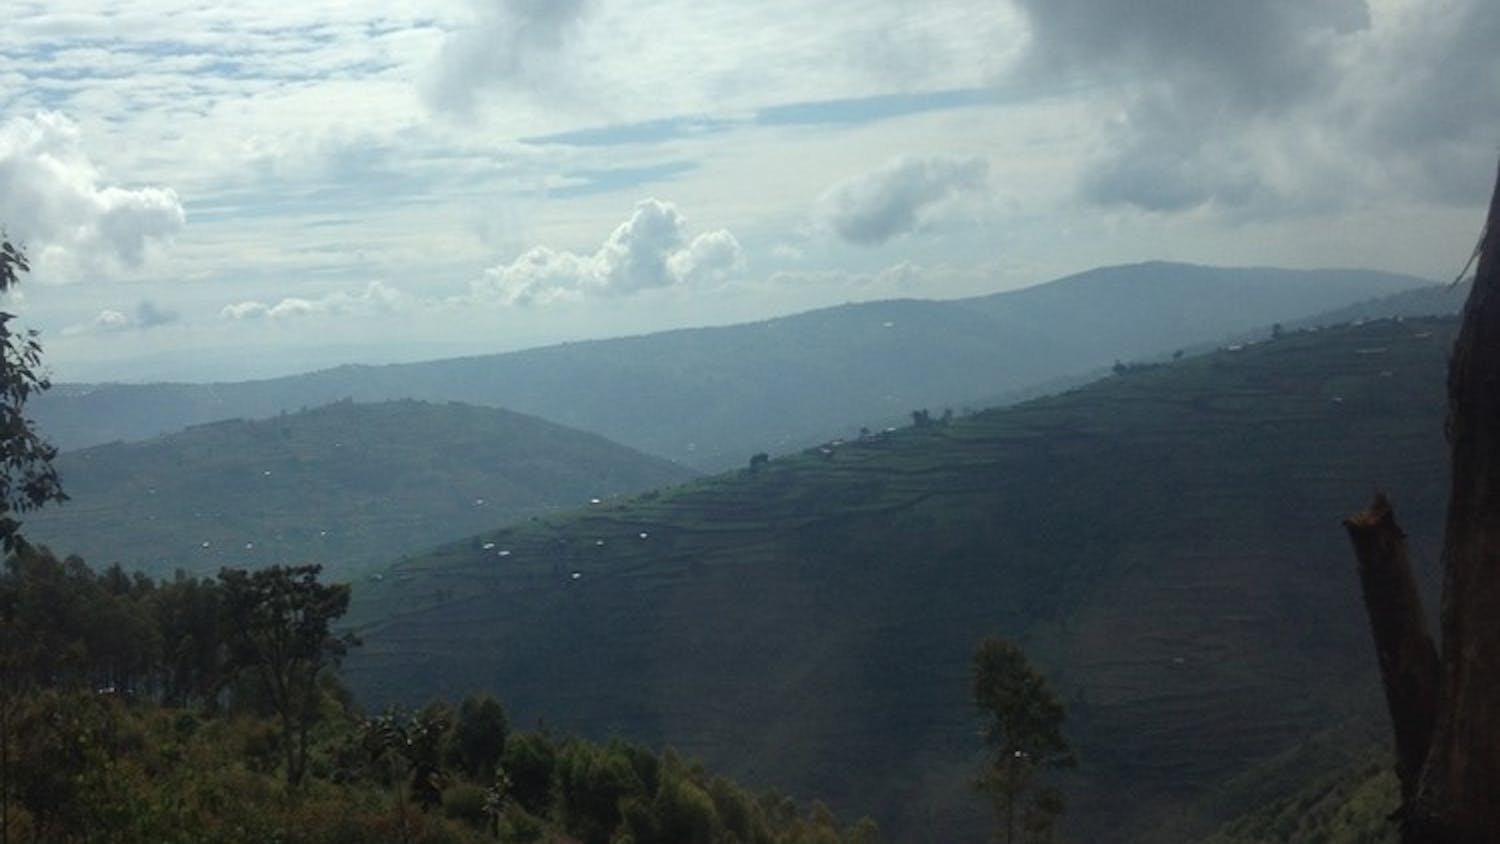 The view from Kigali, Rwanda. The chances of Ebola infecting Rwanda were and remain very slim.